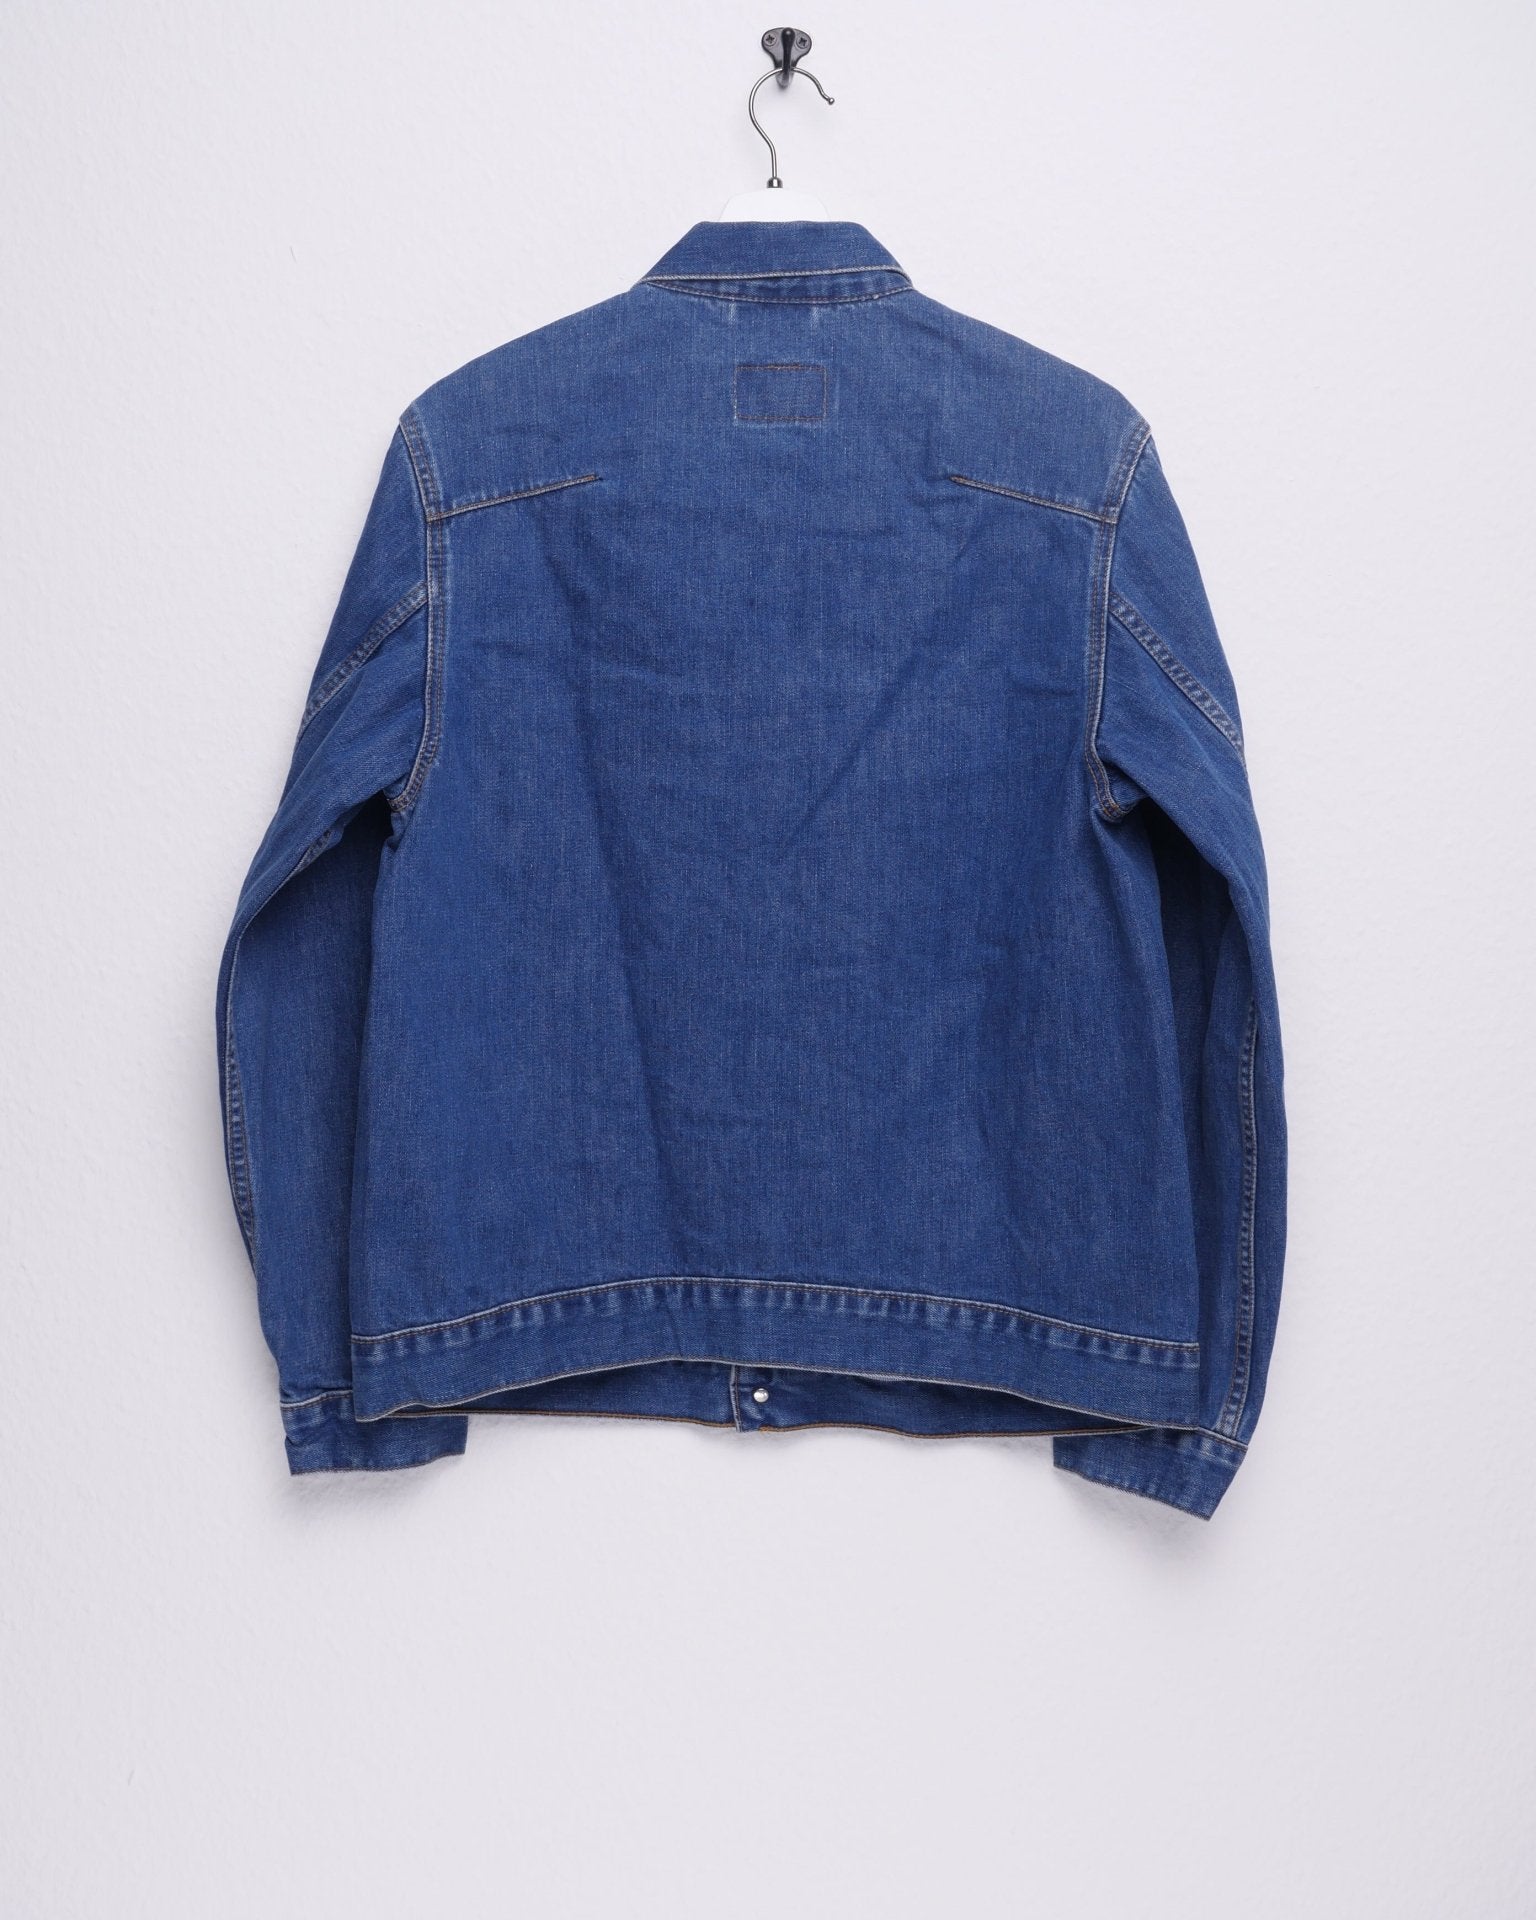 Levis Vintage Denim Jacket - Peeces